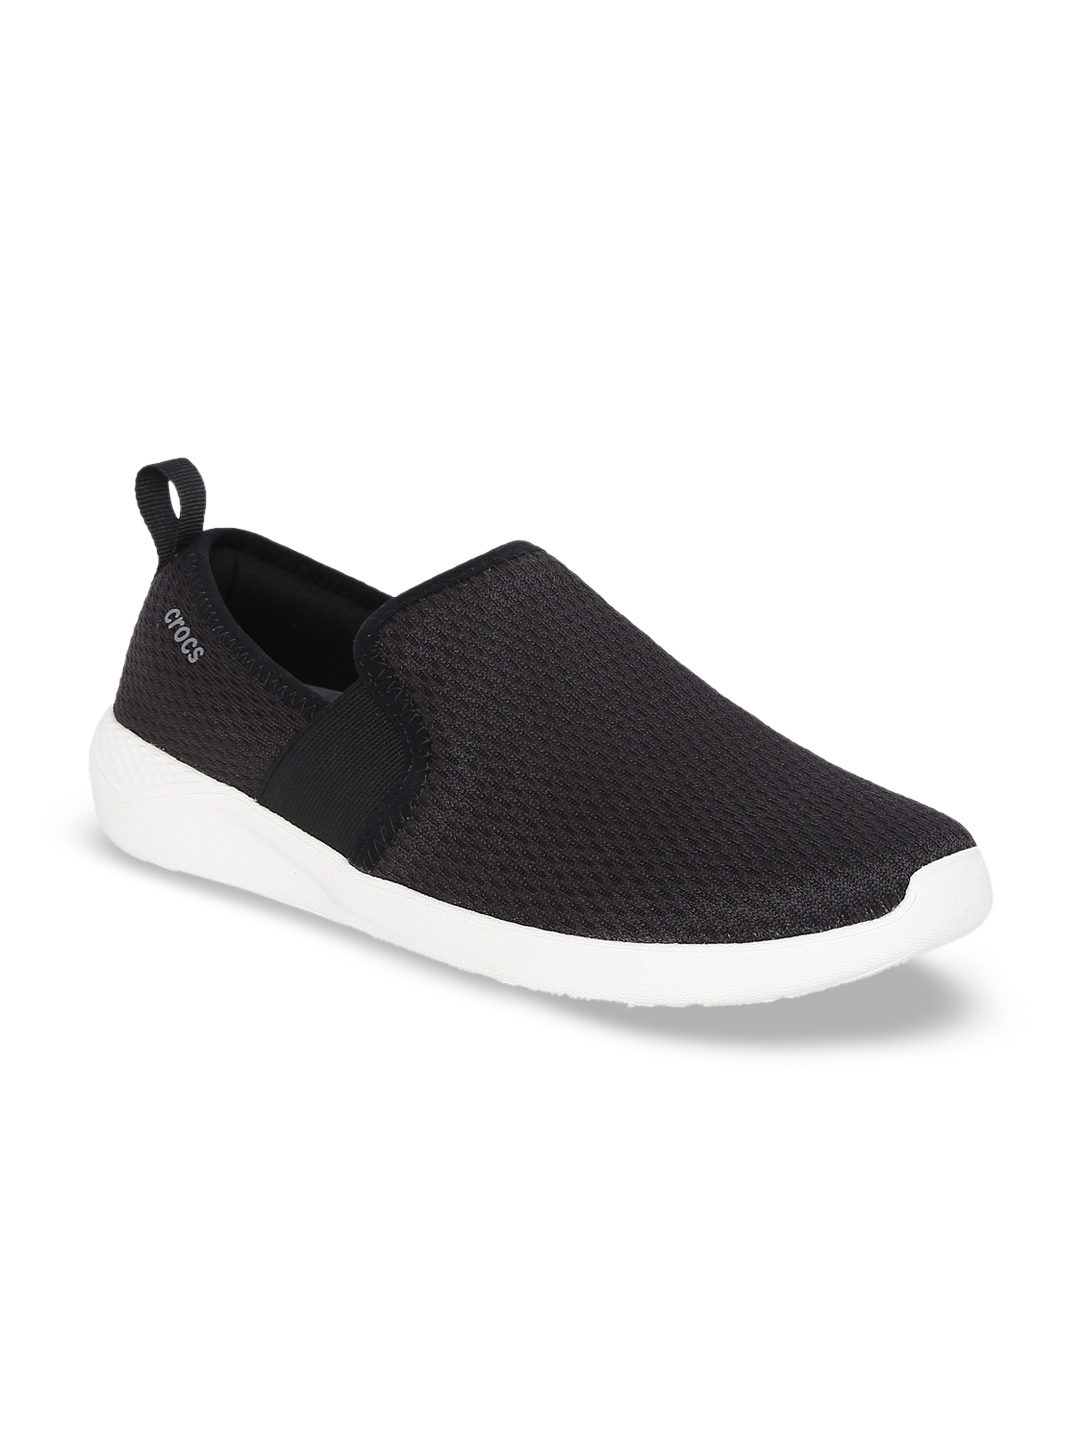 Buy Crocs Literide Men Black Slip On Sneakers - Casual Shoes for Men ...